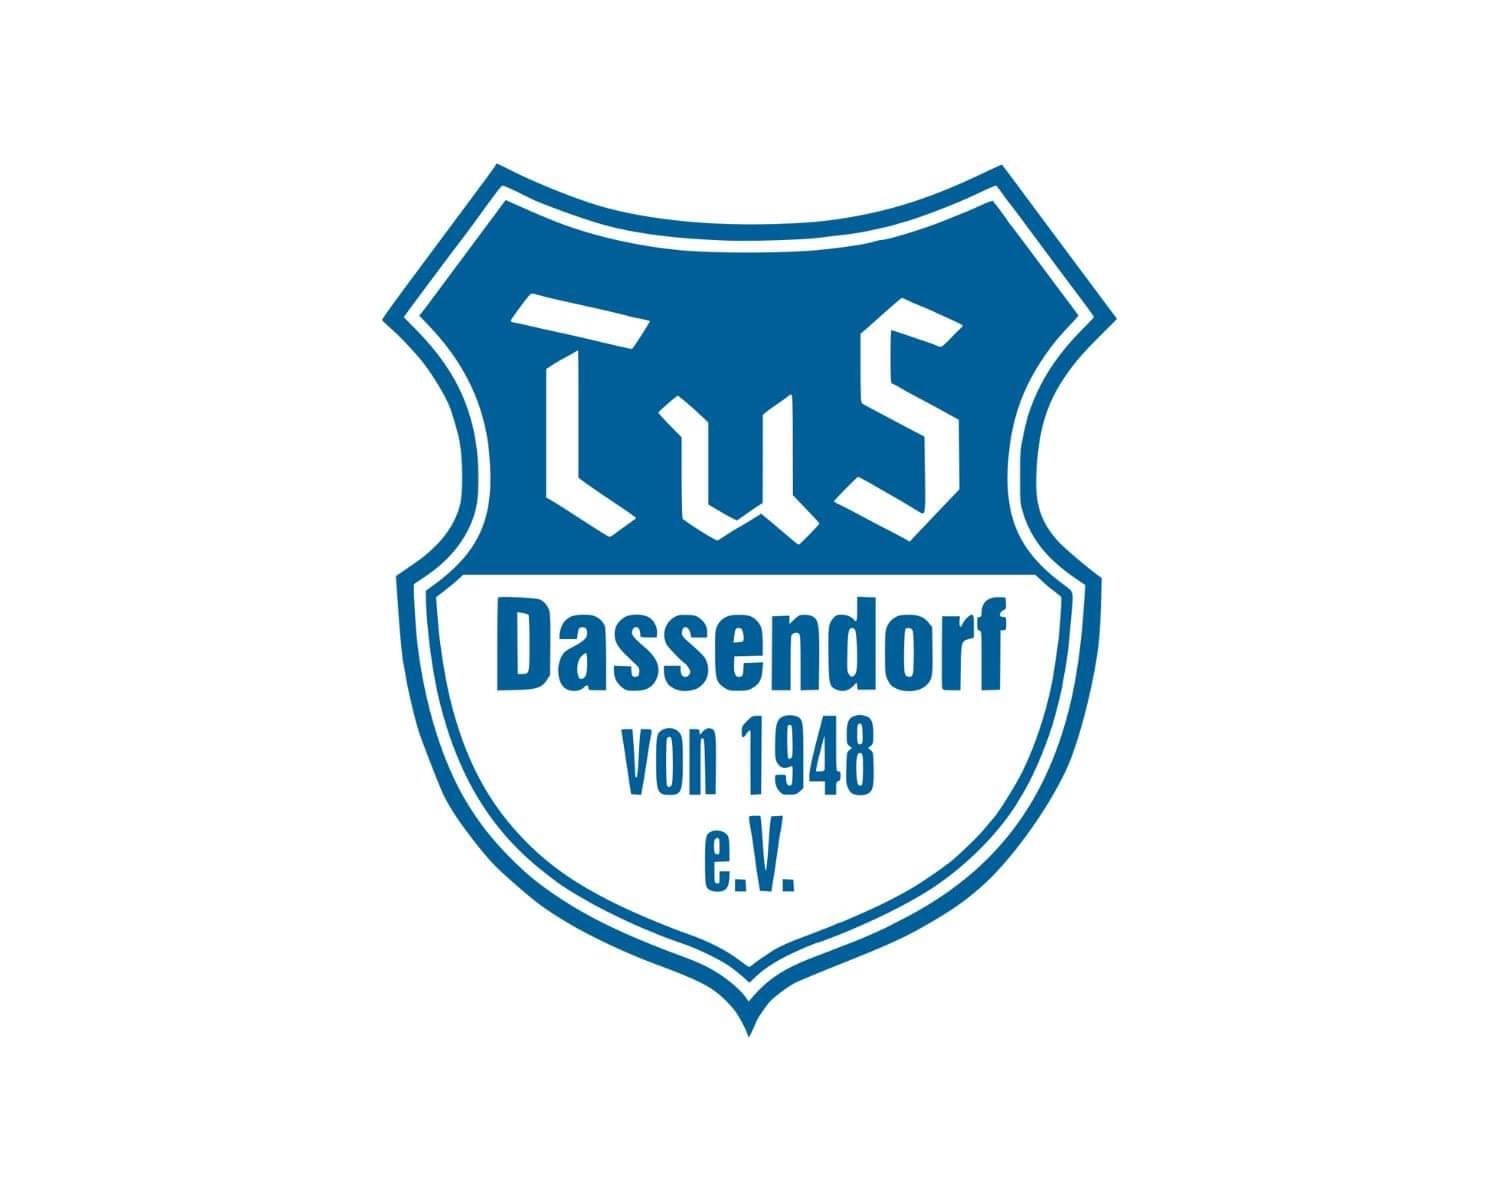 tus-dassendorf-11-football-club-facts